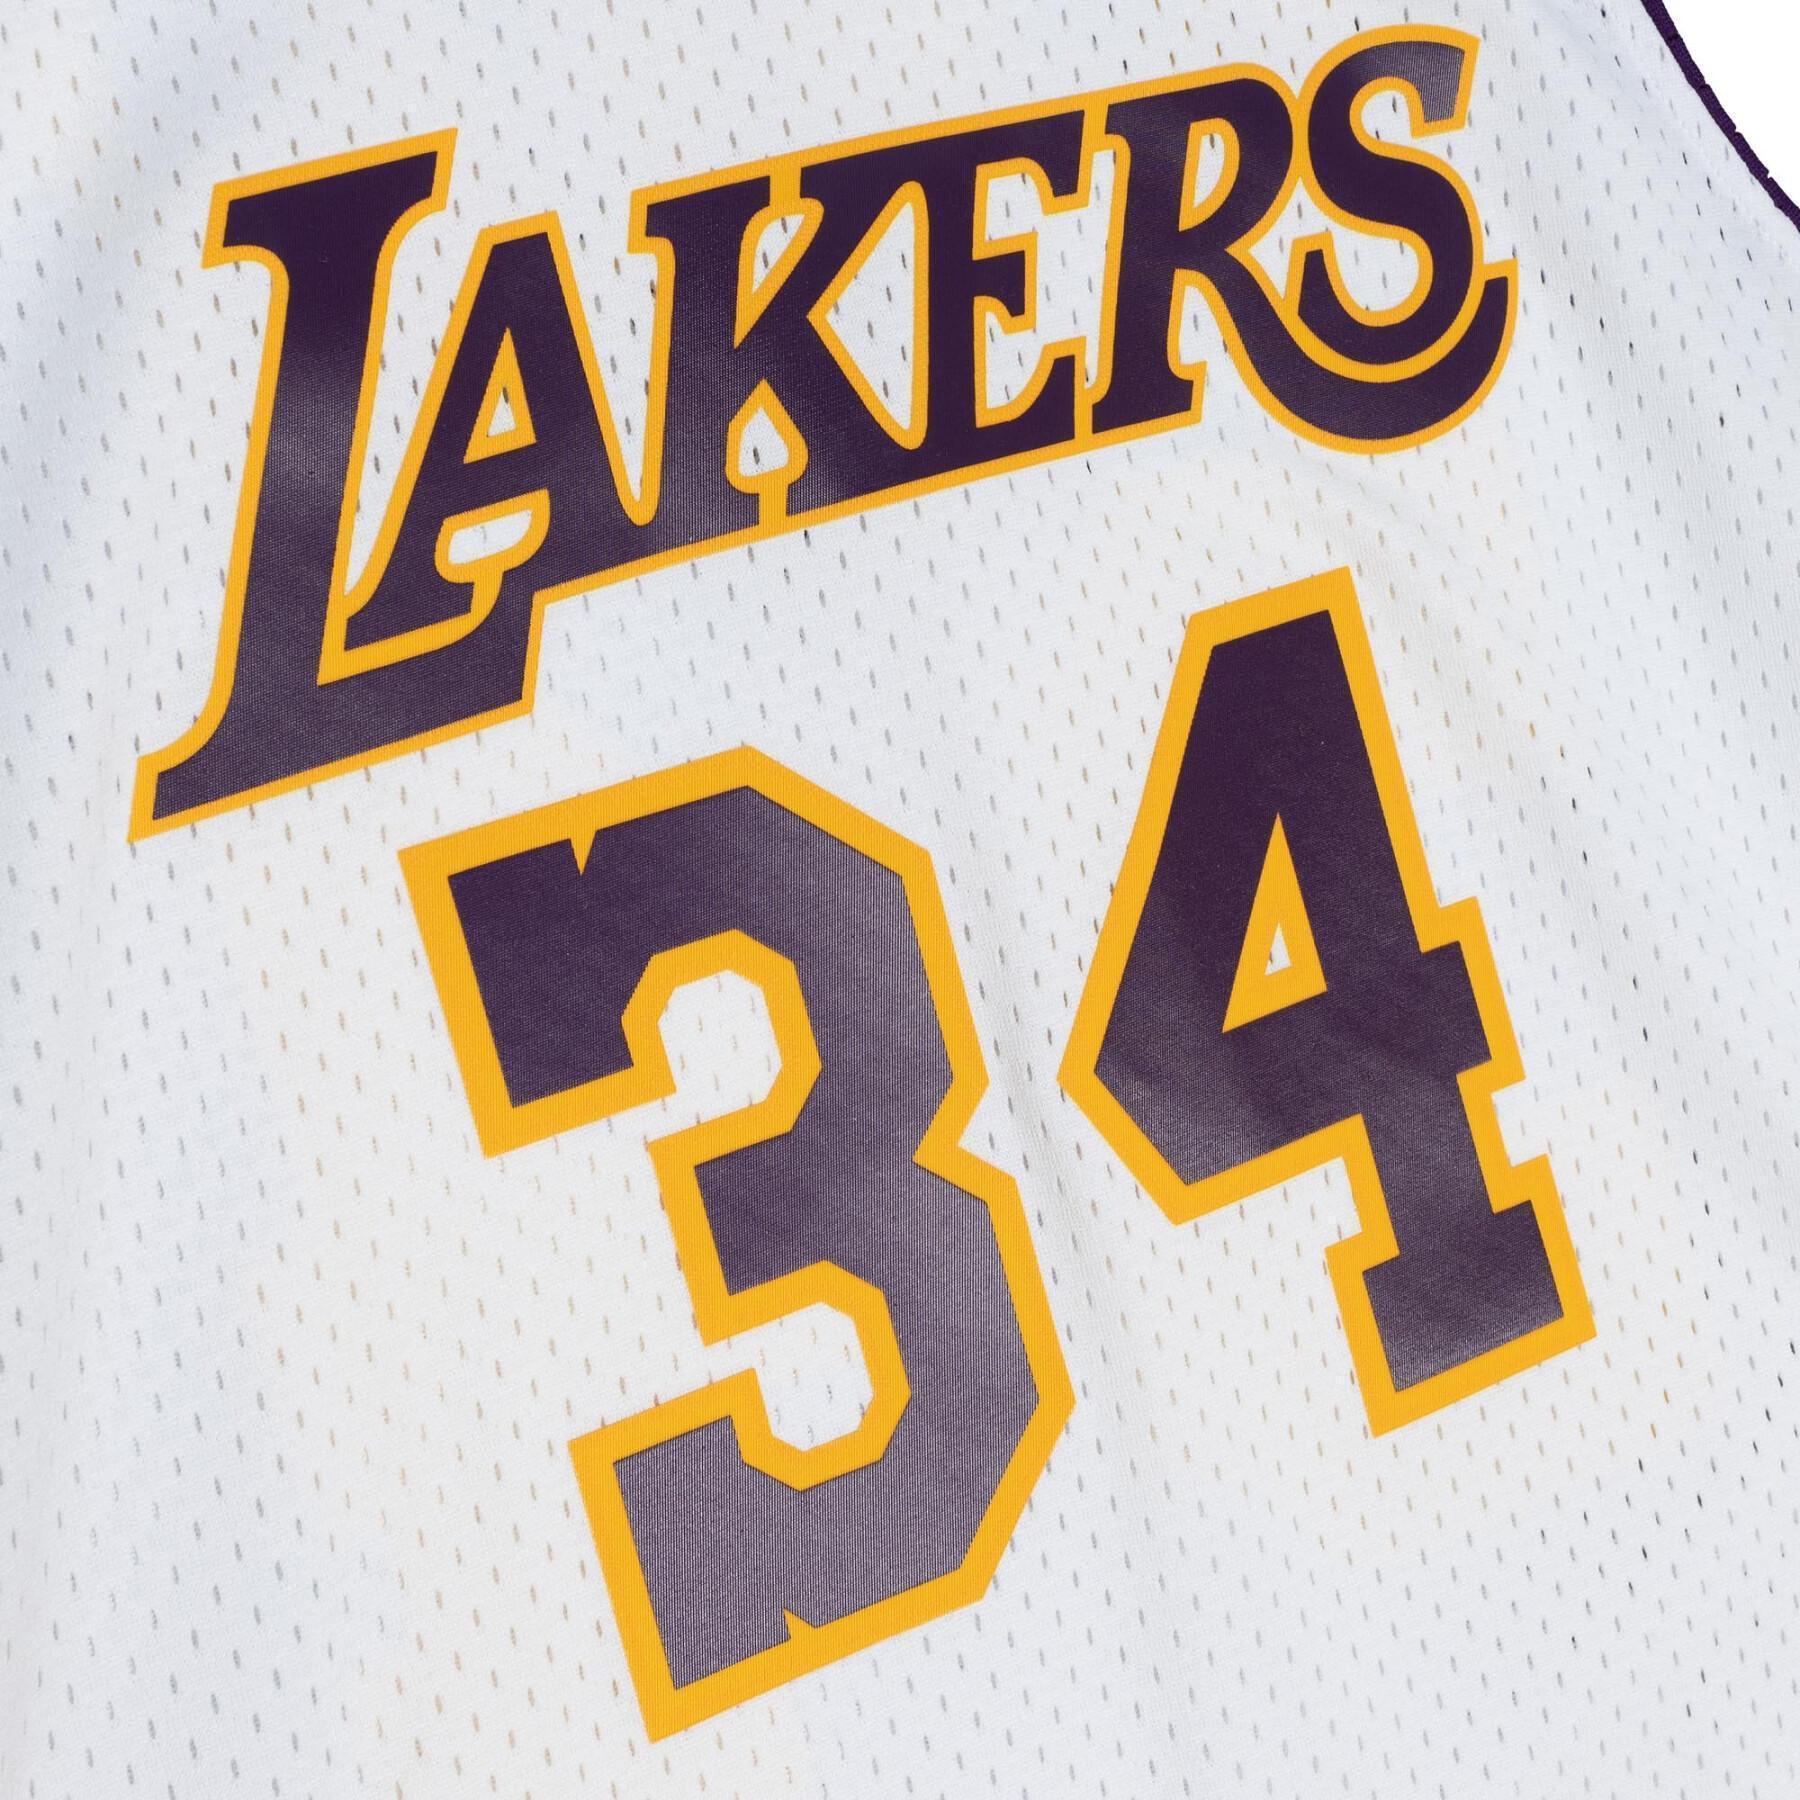 Lakers swingman shaquille o'neal alternate jersey 2002/03